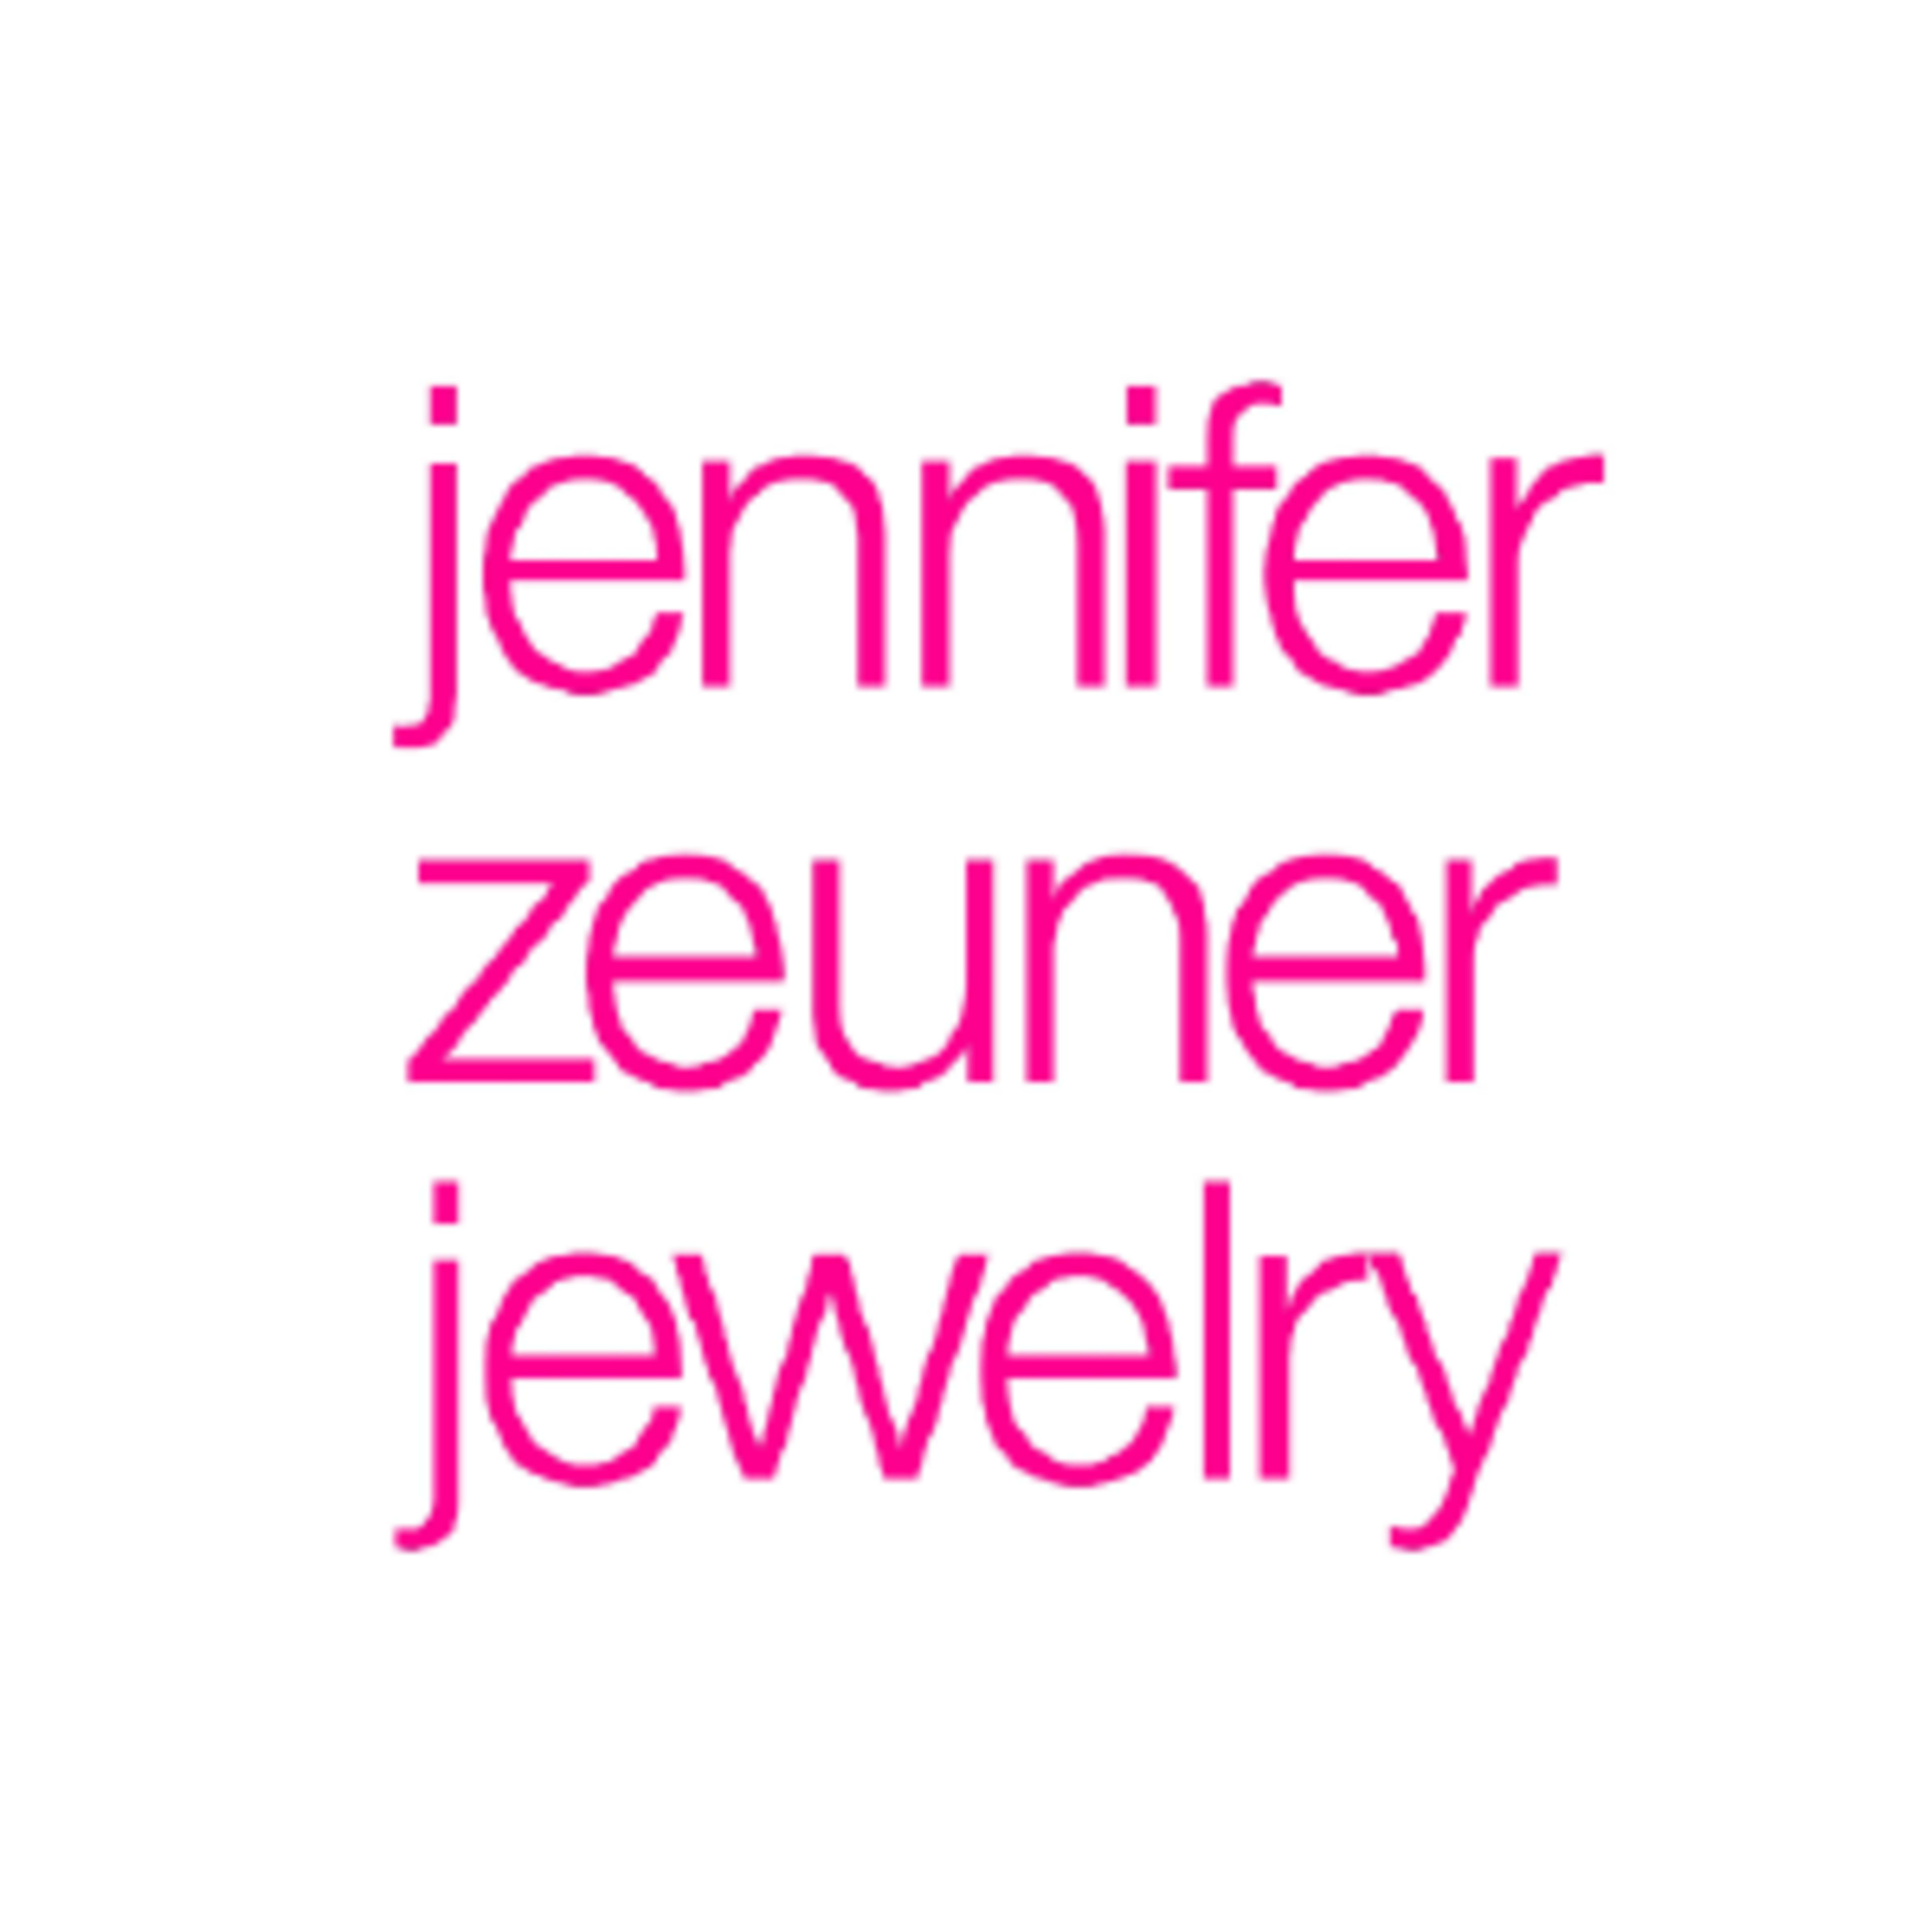 Jennifer Zeuner JewelryCode